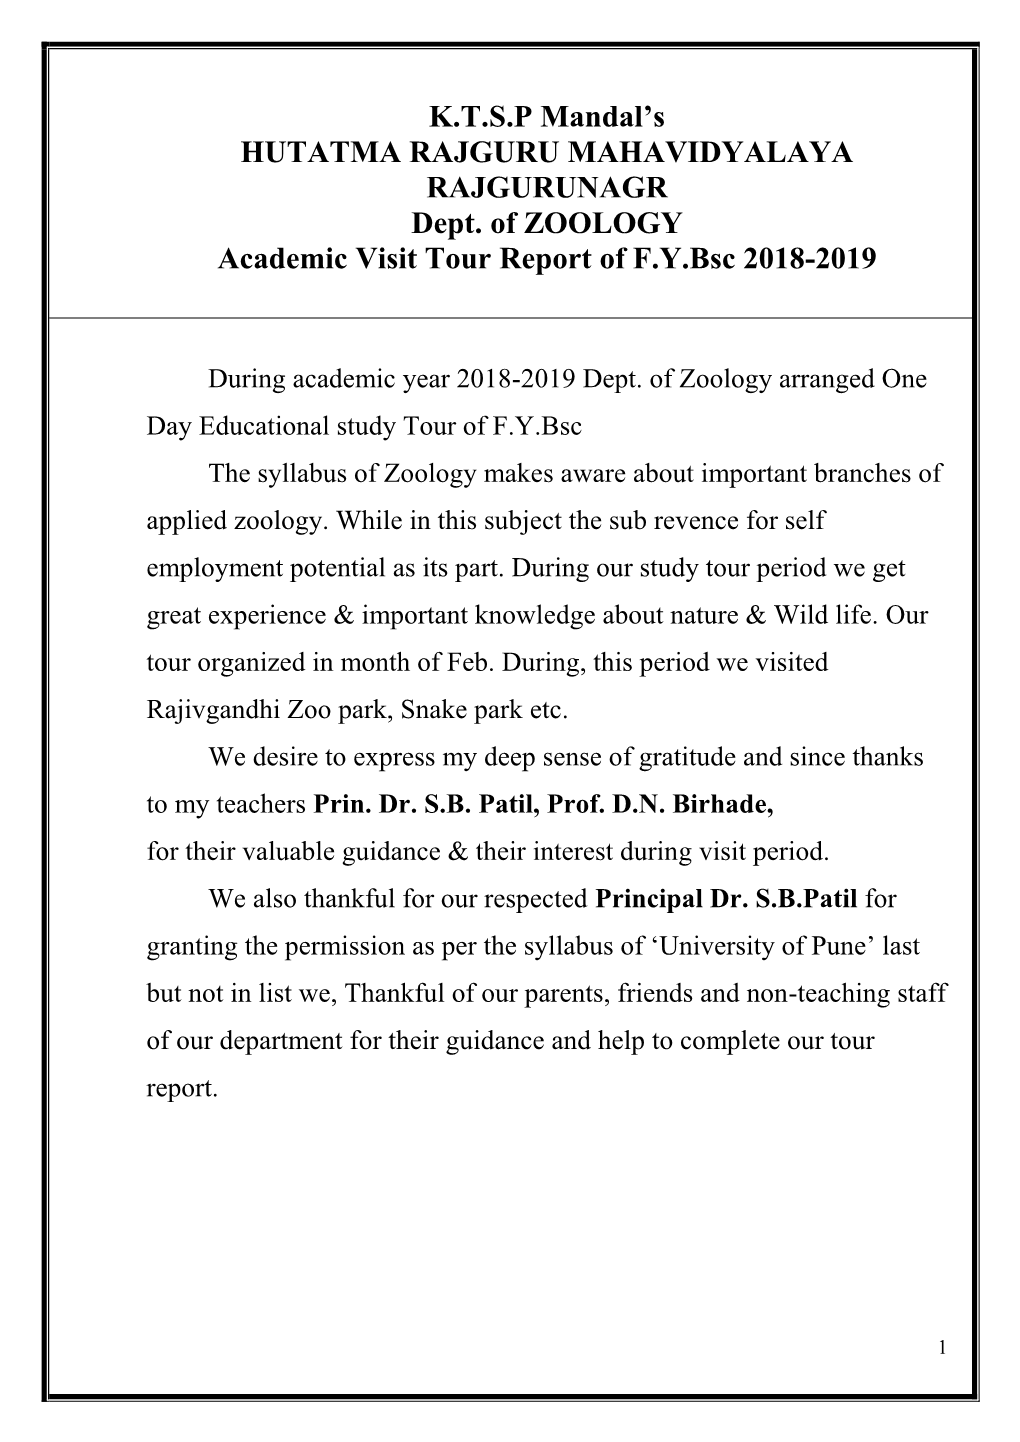 K.T.S.P Mandal's HUTATMA RAJGURU MAHAVIDYALAYA RAJGURUNAGR Dept. of ZOOLOGY Academic Visit Tour Report of F.Y.Bsc 2018-2019